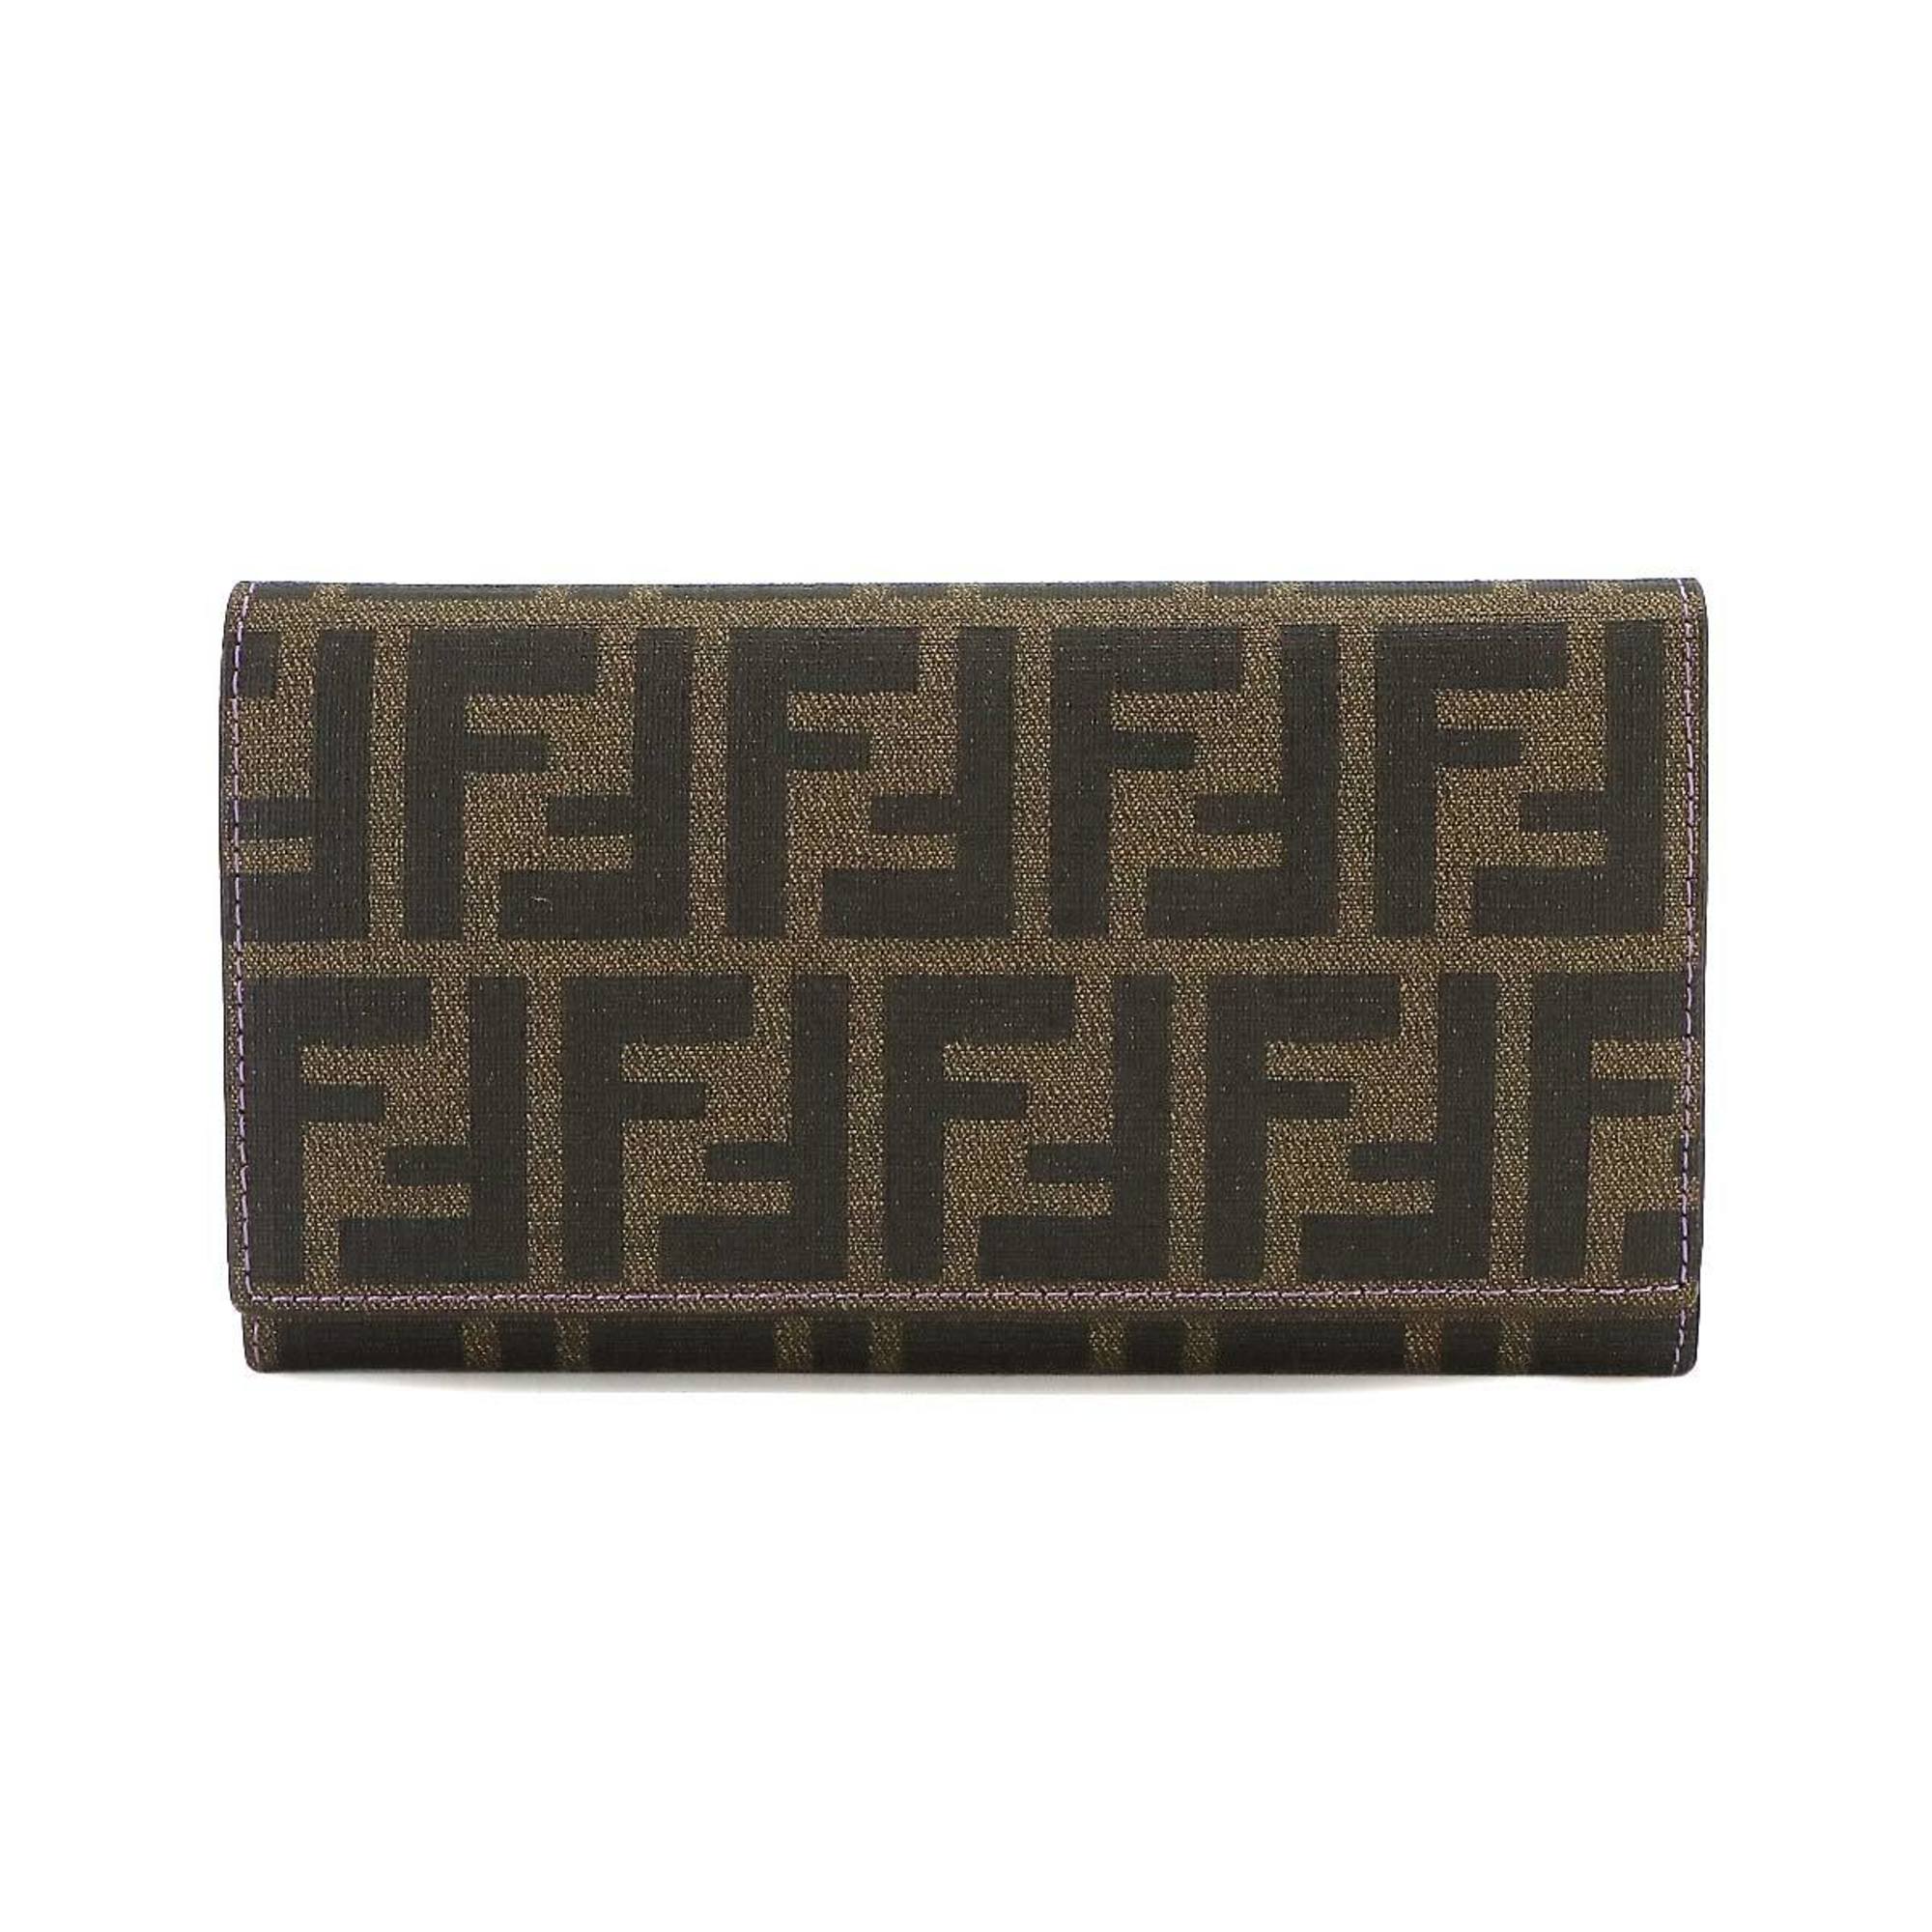 FENDI Fendi Zucca pattern bi-fold long wallet PVC leather brown purple 8M0000 gold metal fittings Wallet